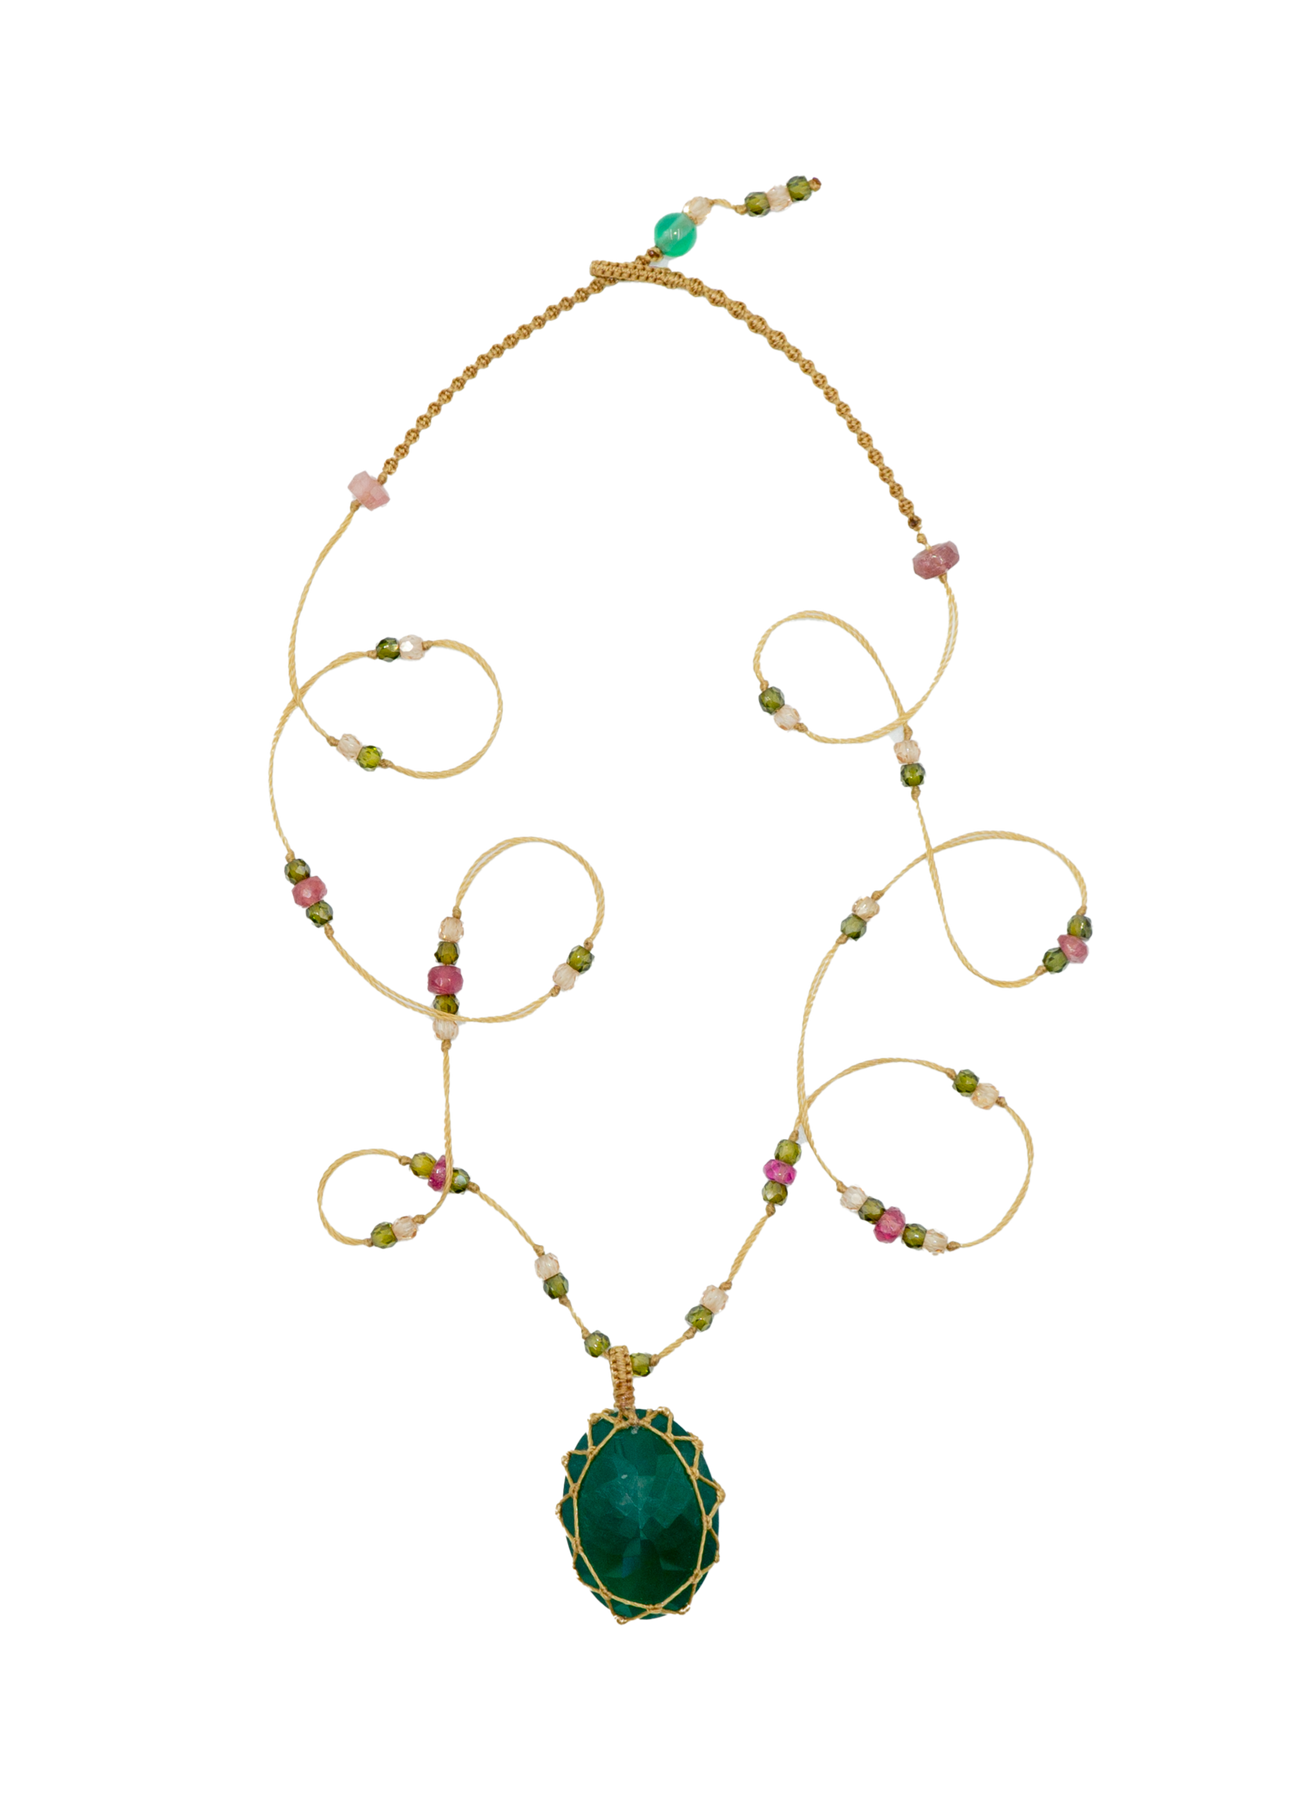 Tibetan Short Necklace - Green Onyx - Mix Pink Tourmaline - Beige Thread